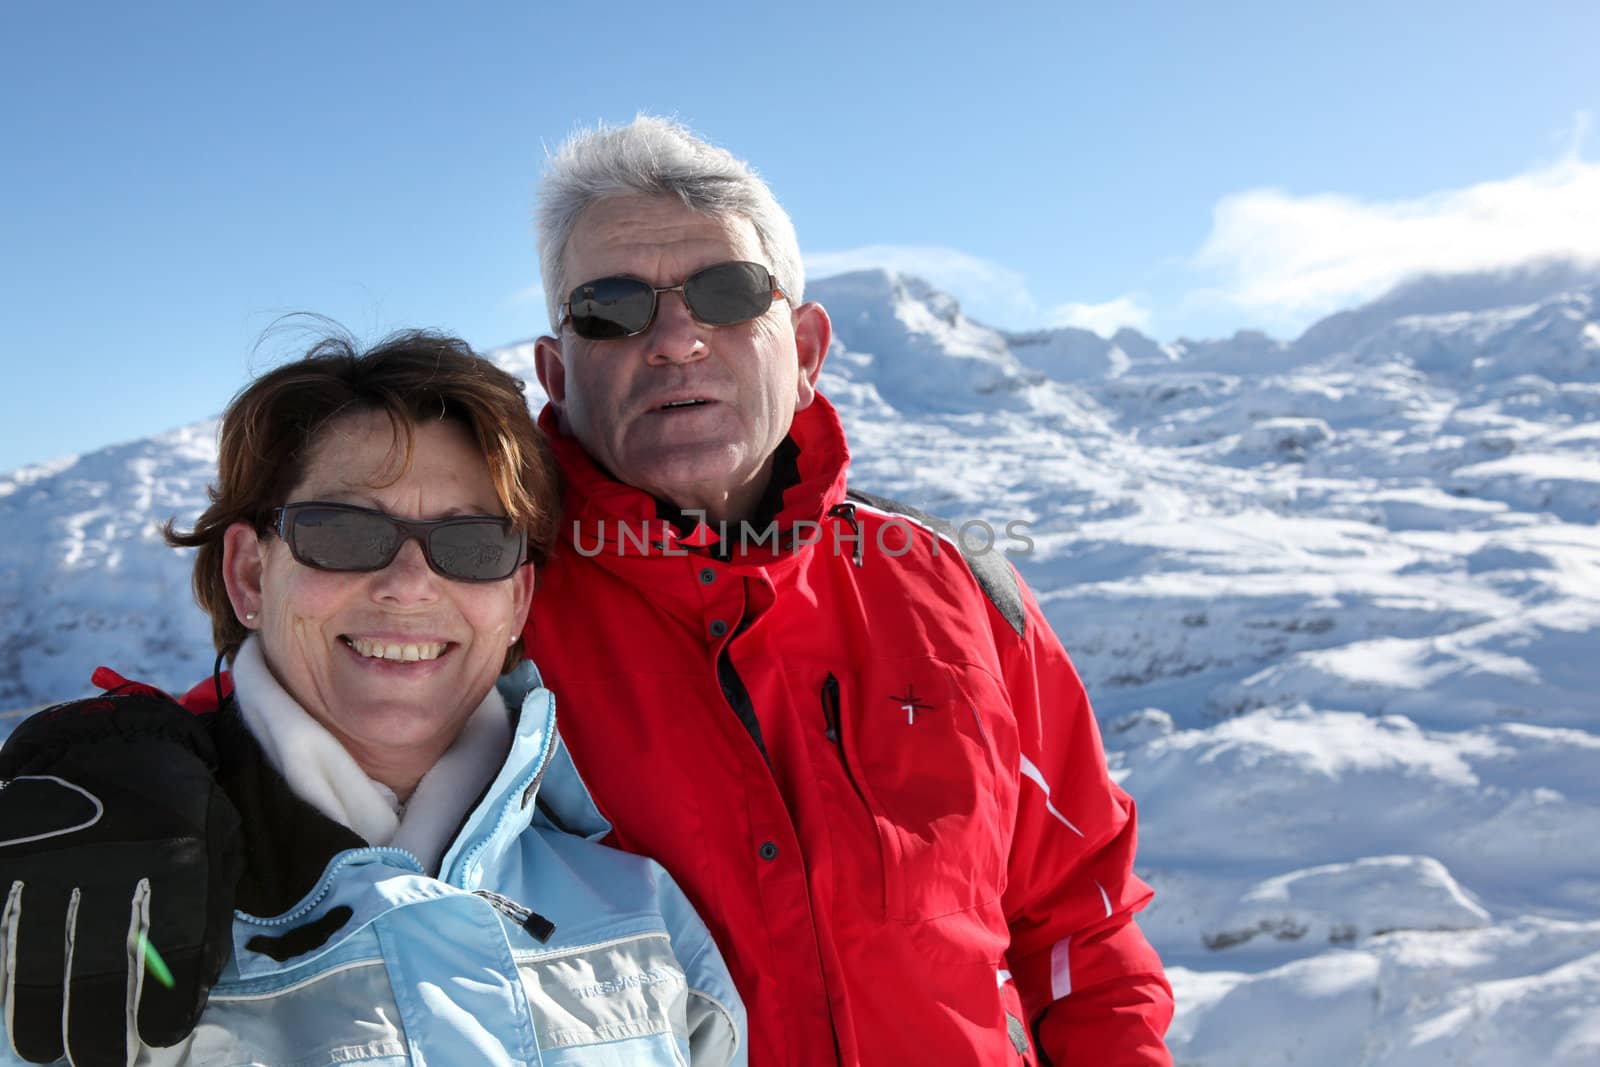 Senior couple on holidays in the mountain